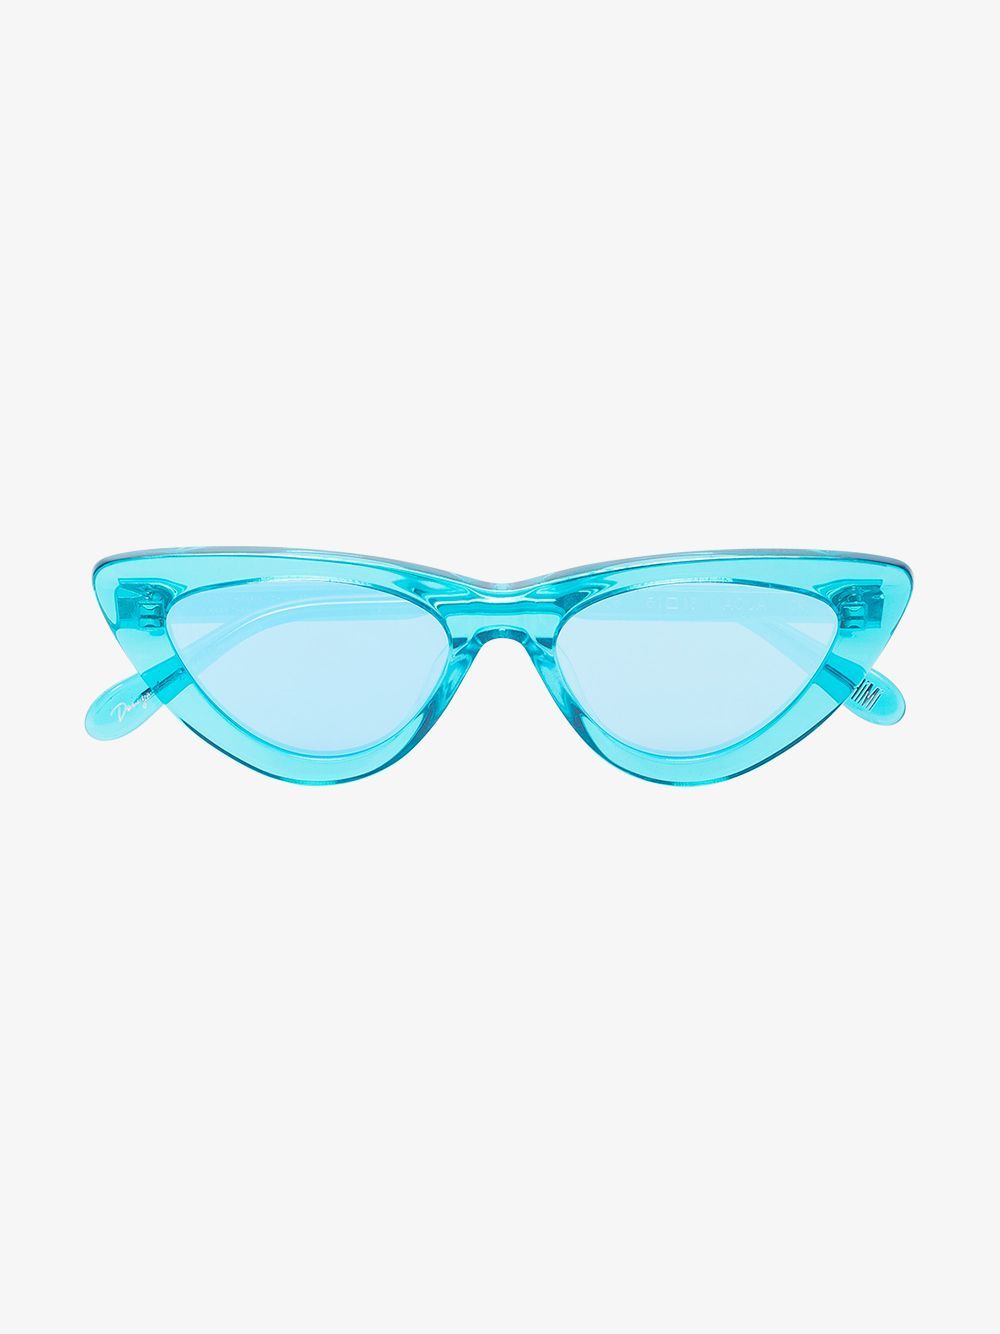 Chimi Blue cat eye sunglasses | Browns Fashion